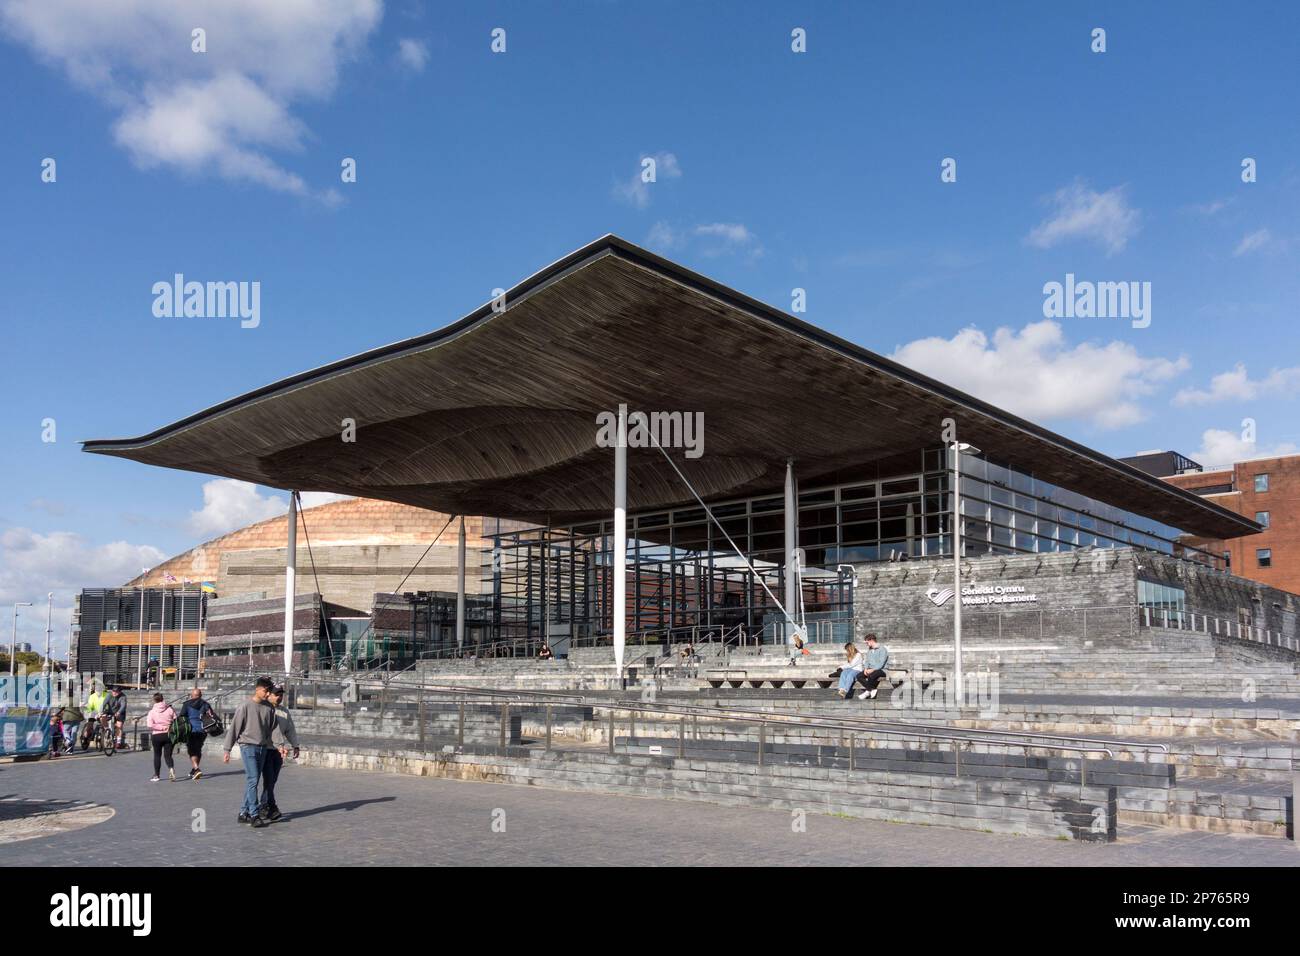 Senedd building (Welsh Parliament), Cardiff Bay, Wales Stock Photo